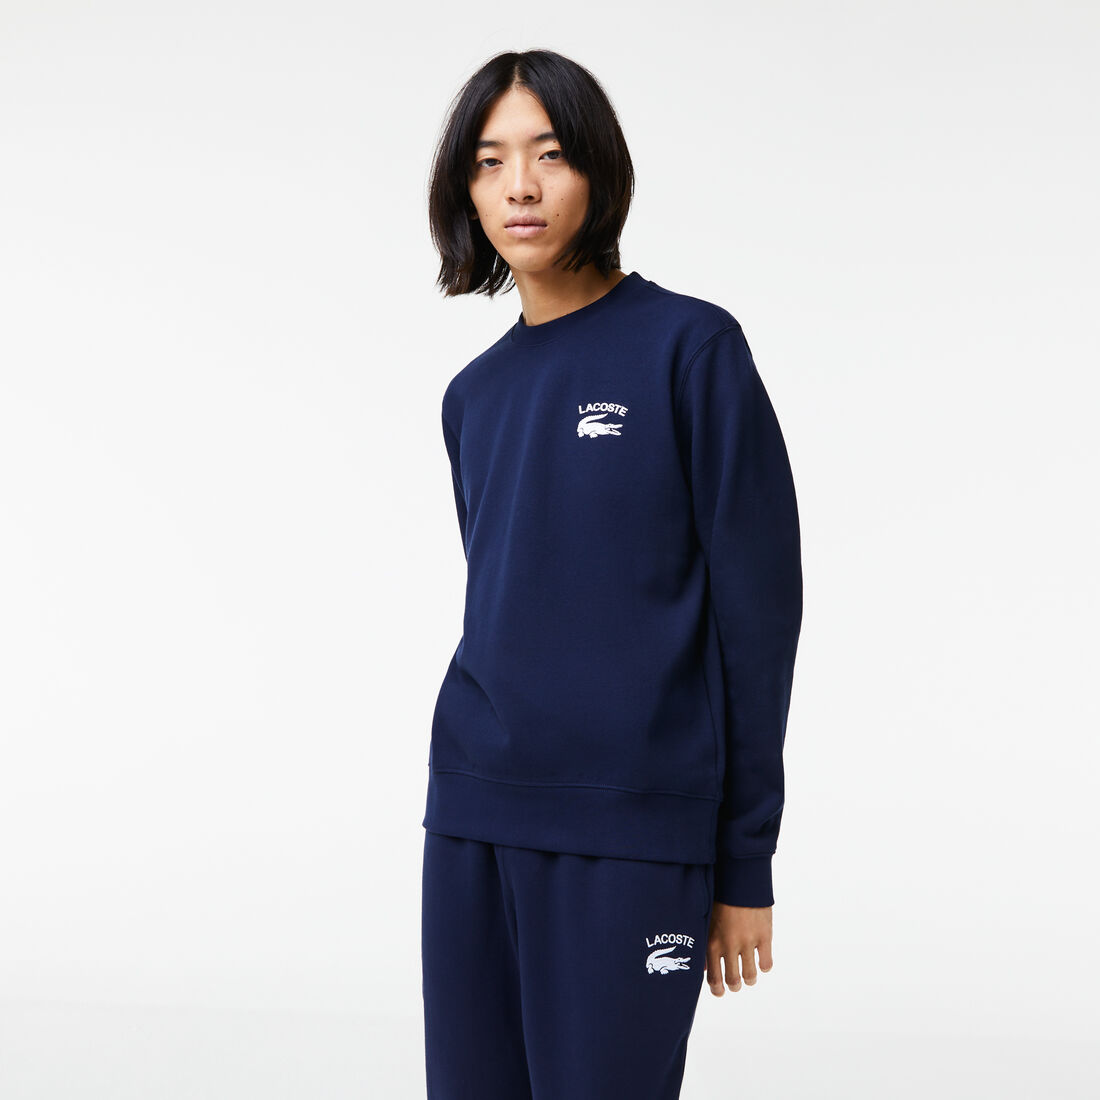 Buy Men's Lacoste Inscription Crew Neck Sweatshirt | Lacoste UAE